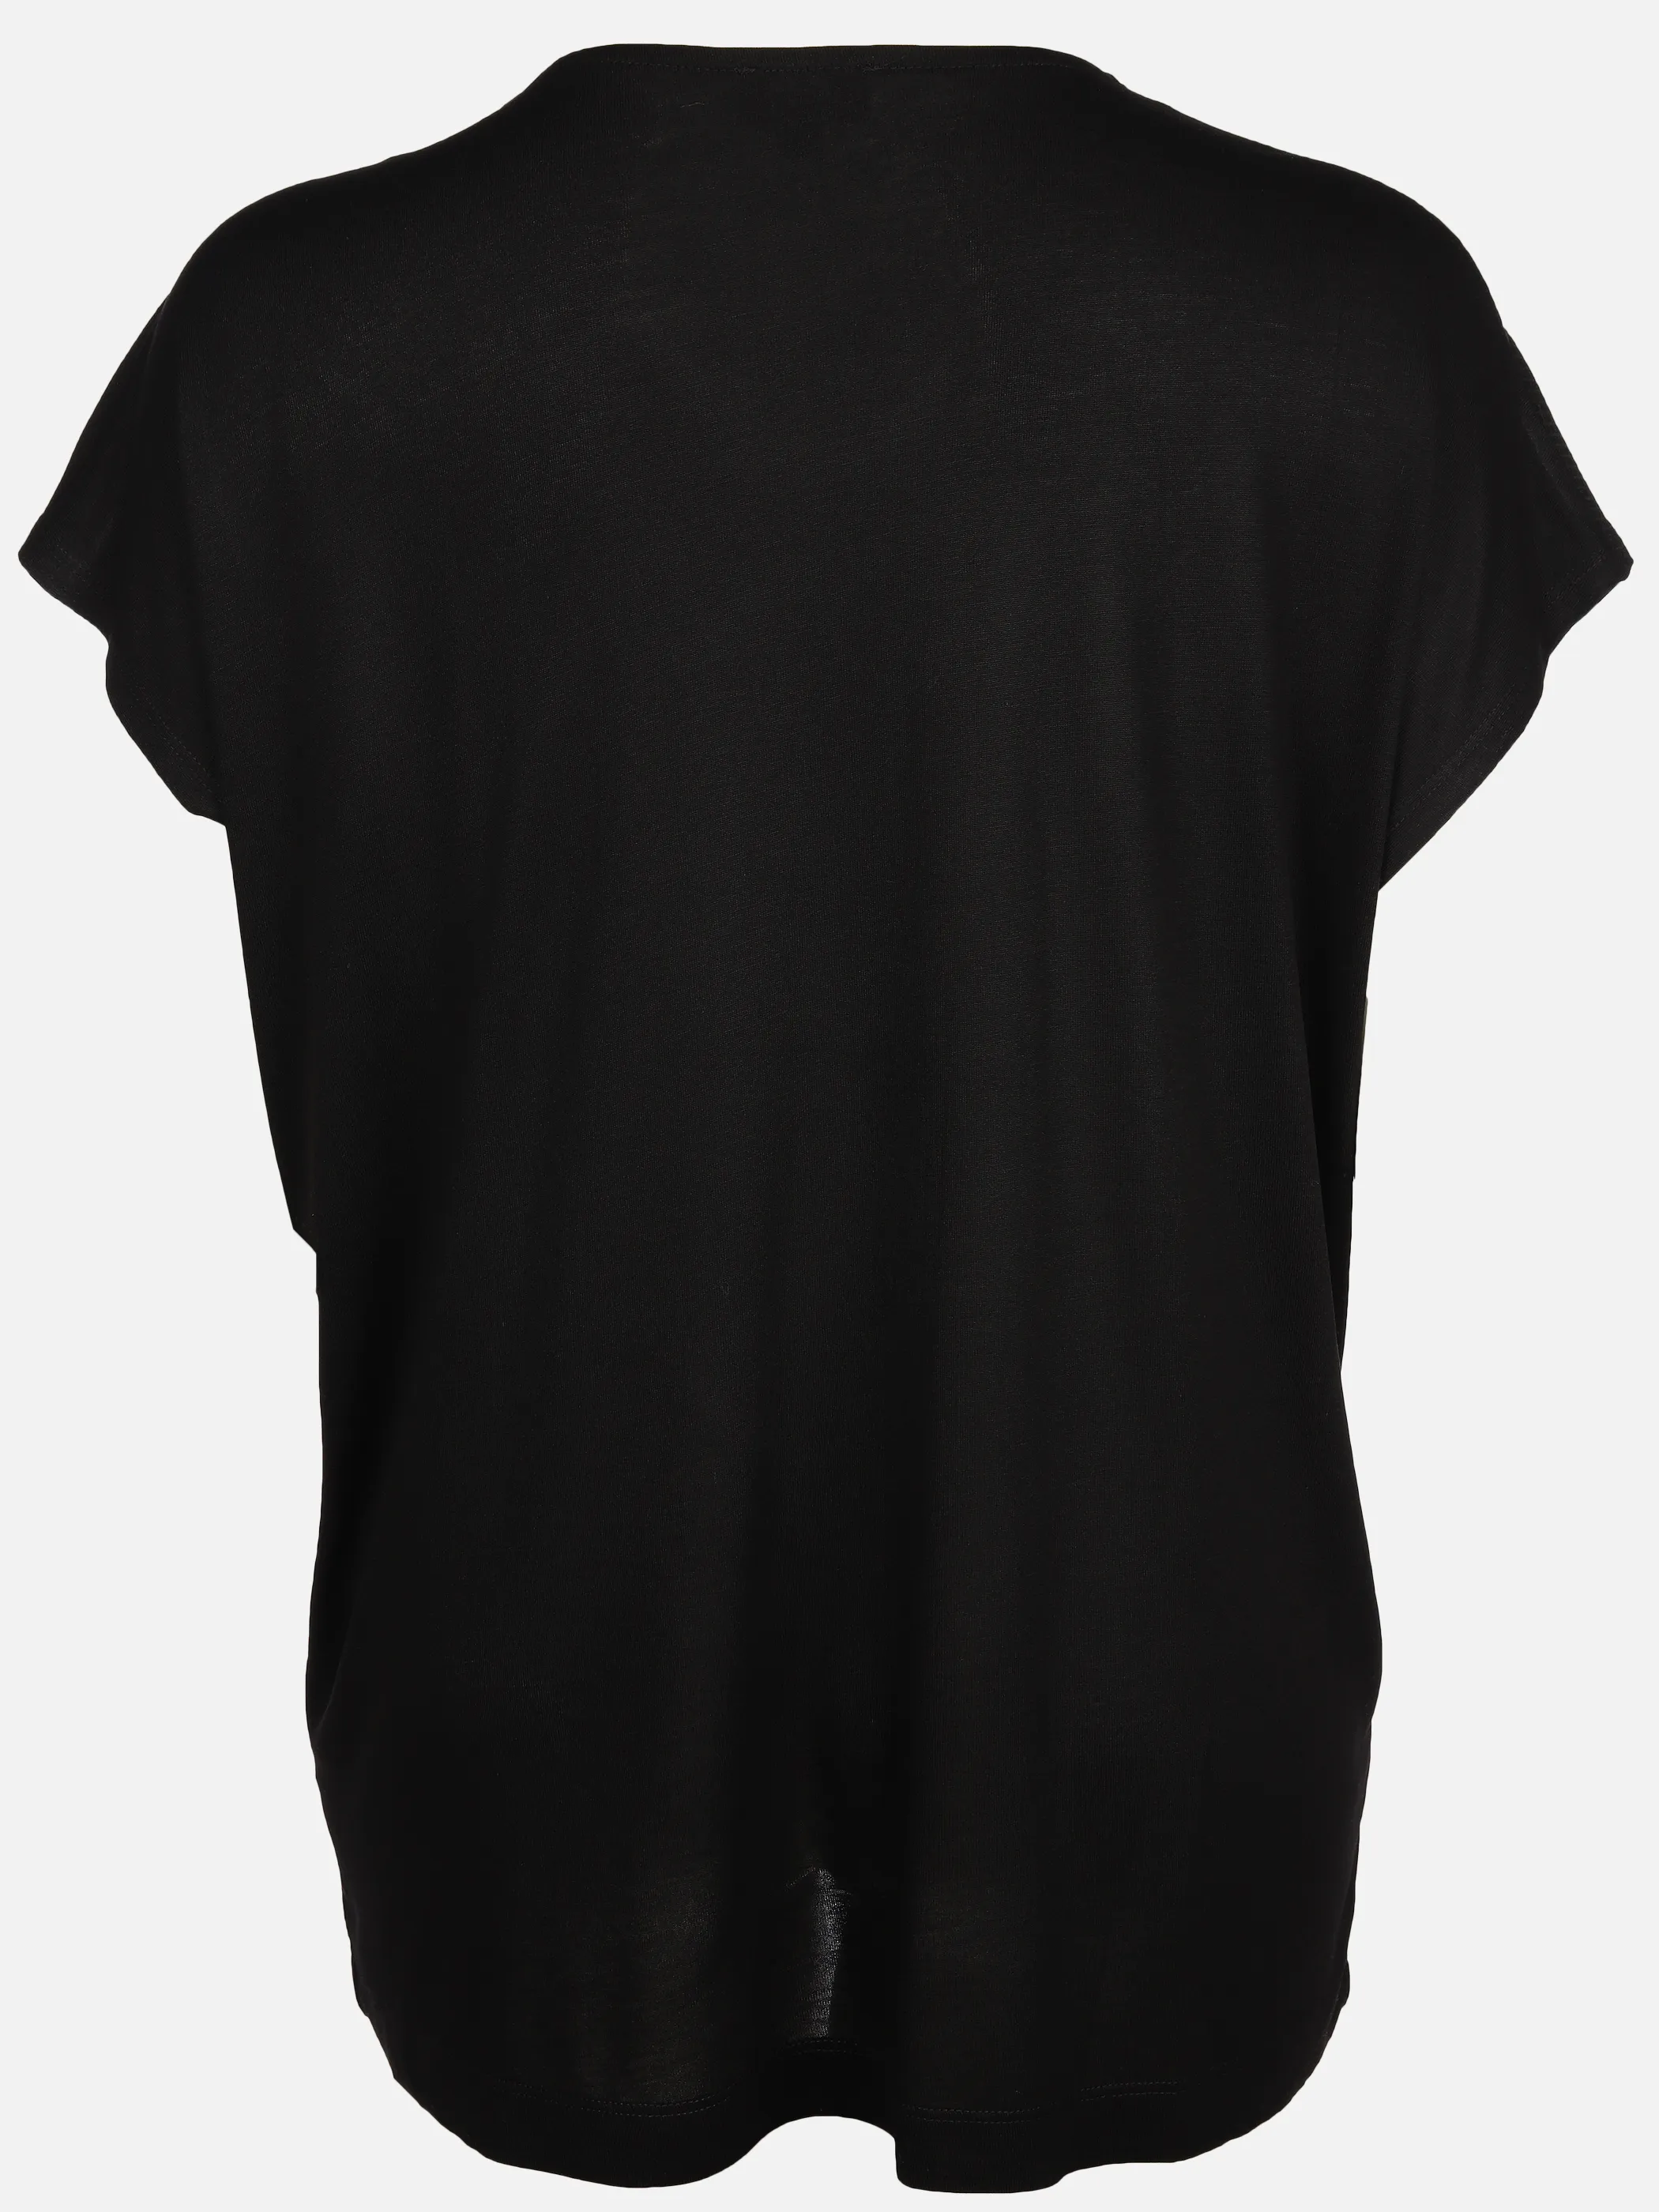 Sonja Blank Da-gr.Gr. T-Shirt V-Ausschnitt Schwarz 890338 BLACK 2